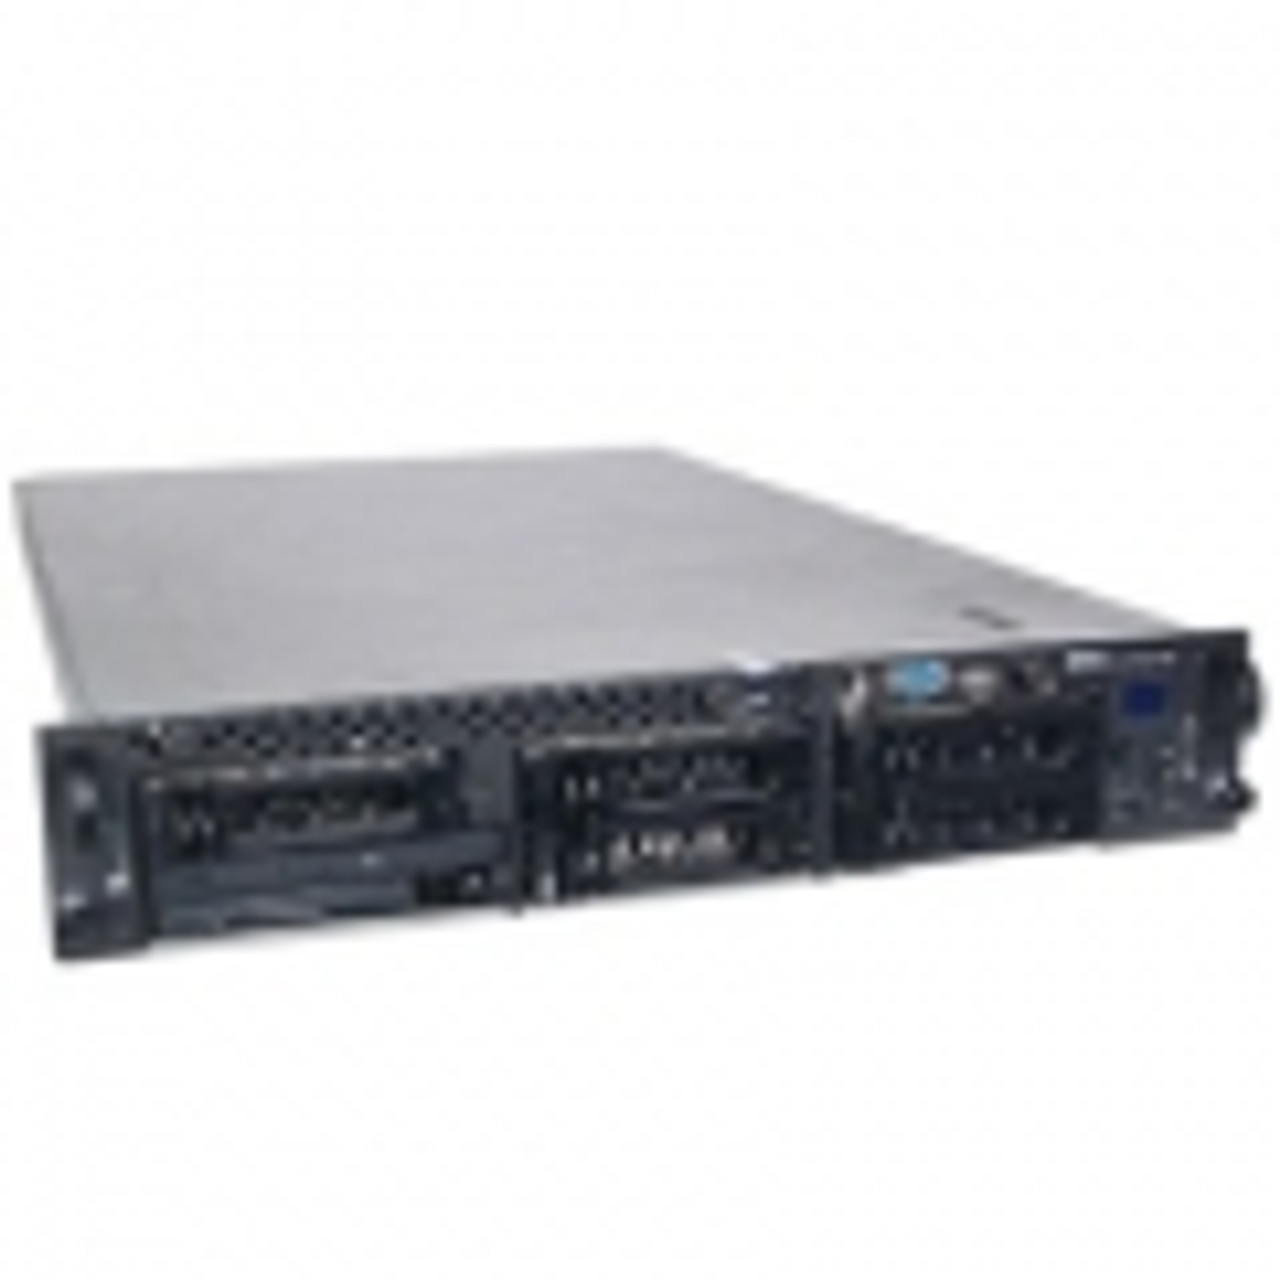 Dell PowerEdge 2650 Servers